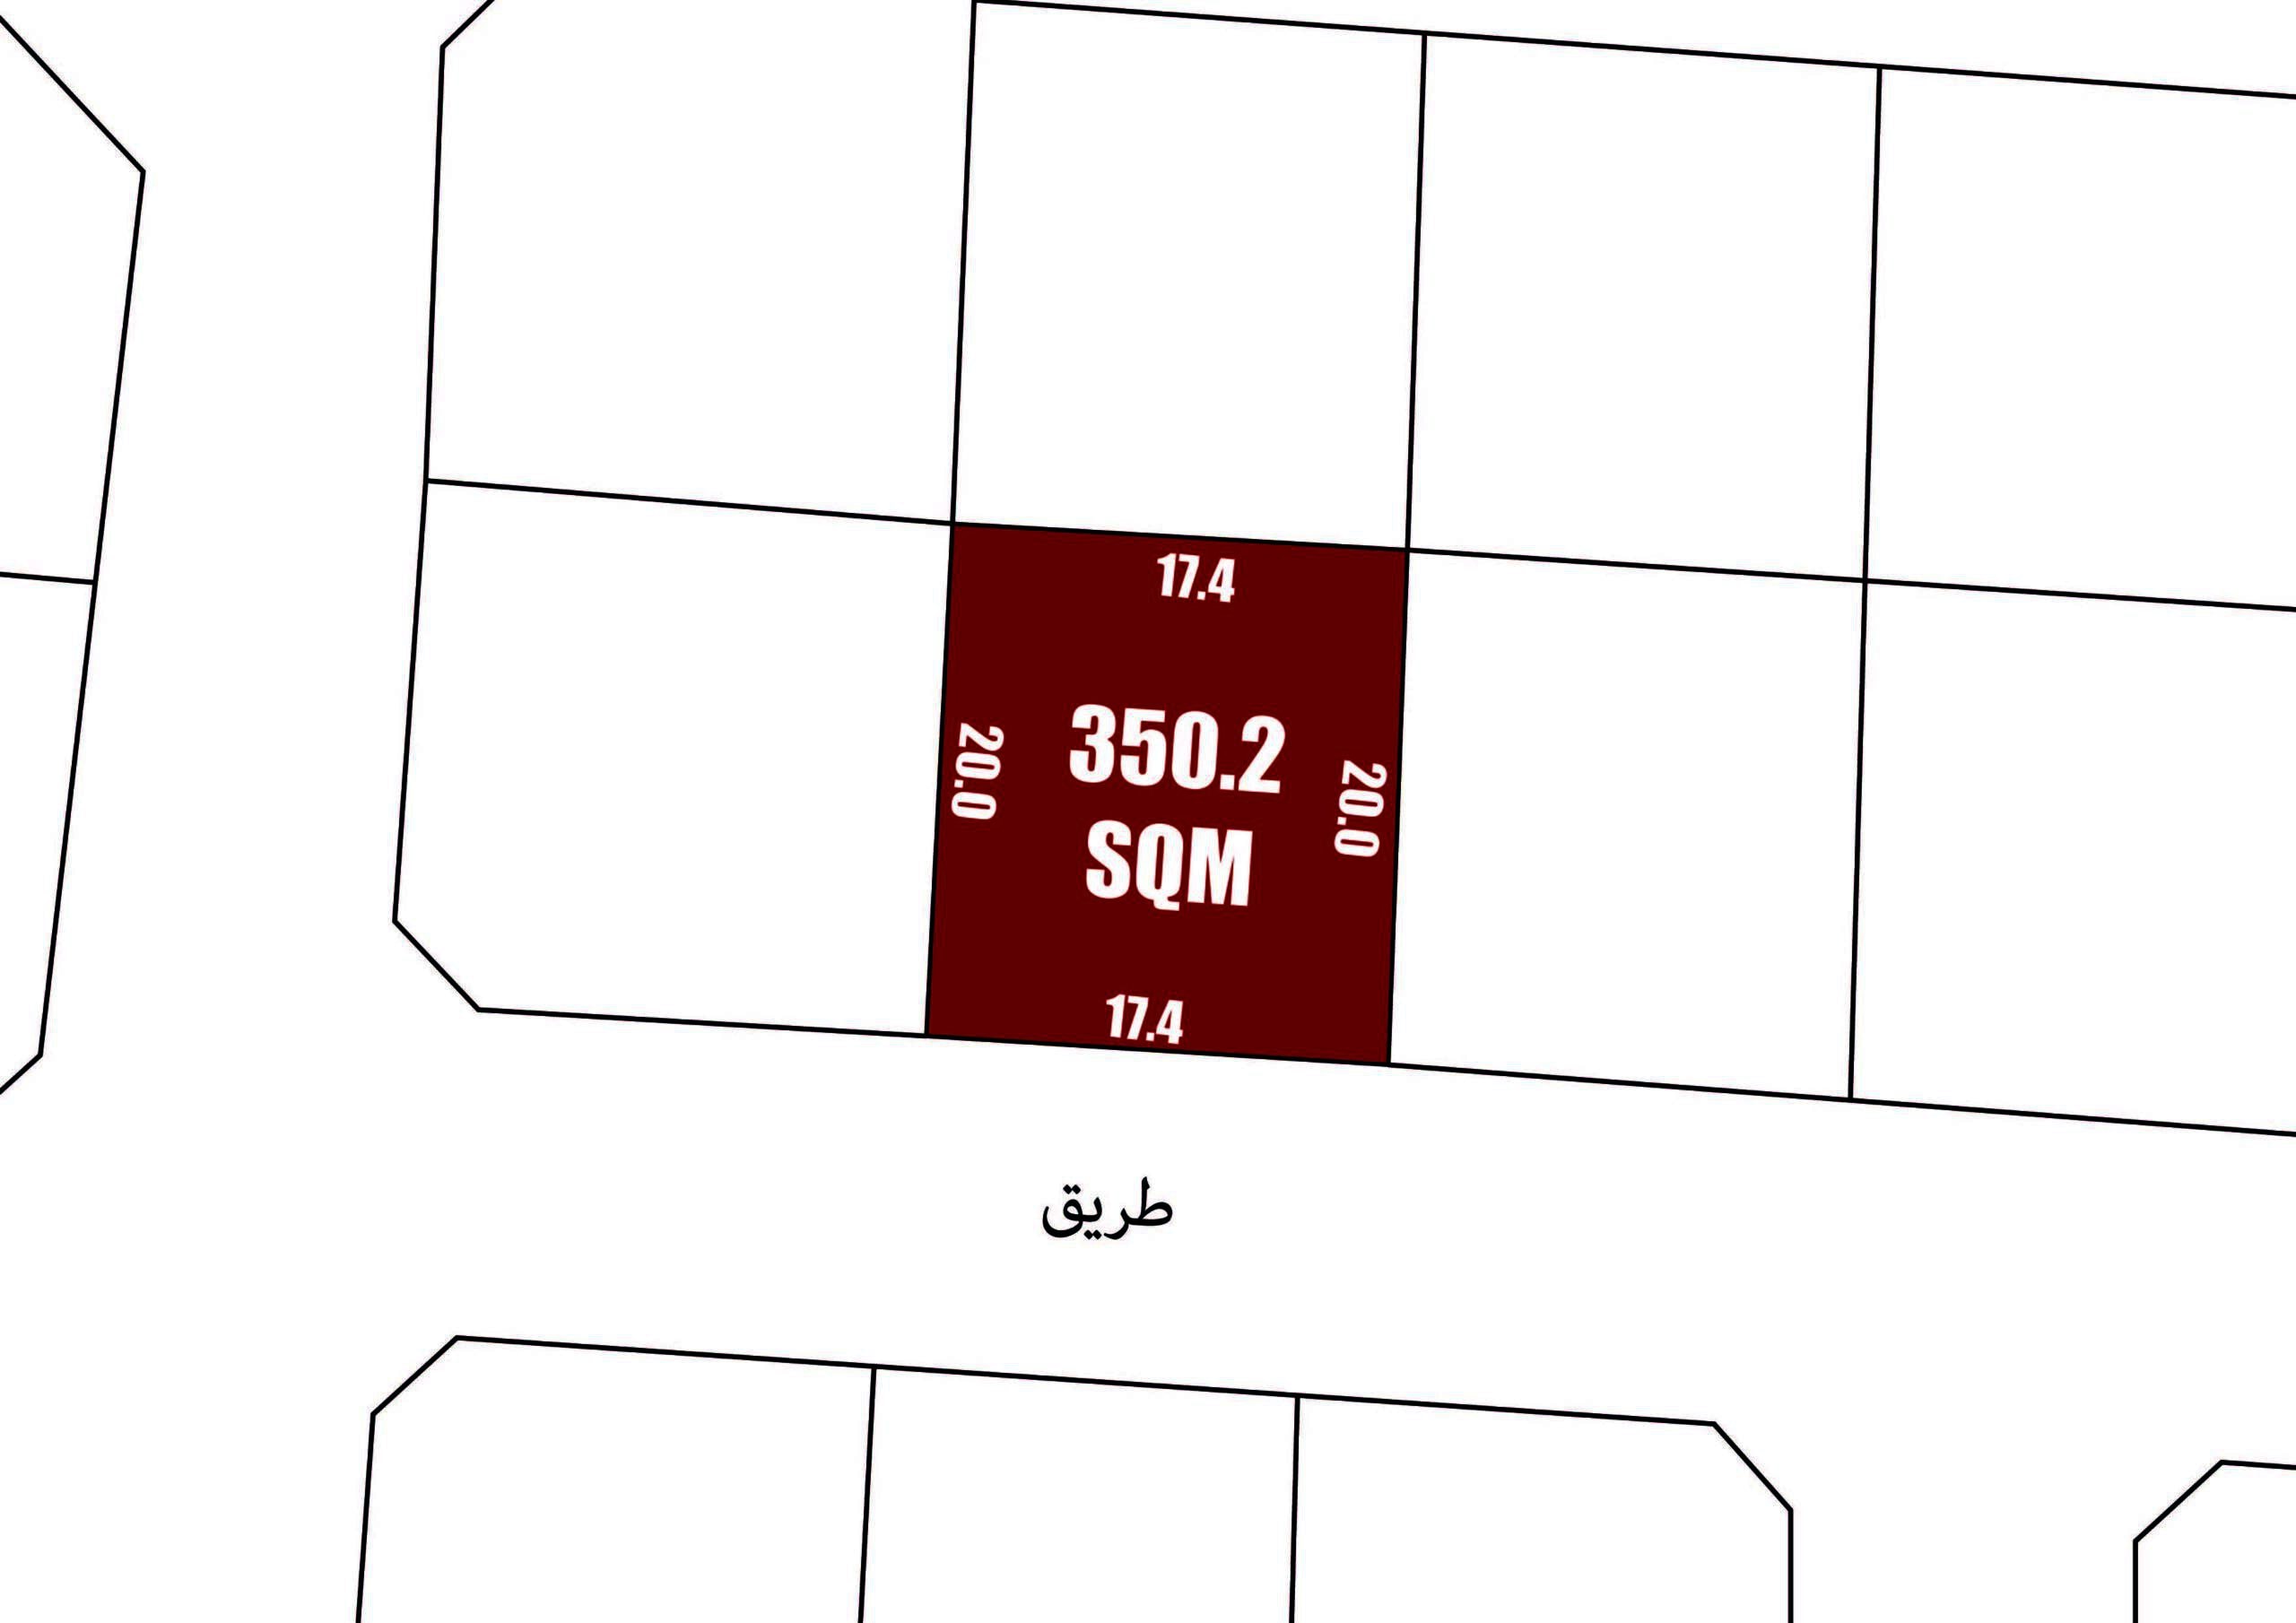 RA Land for Sale in Sadad | 350.2 SQM